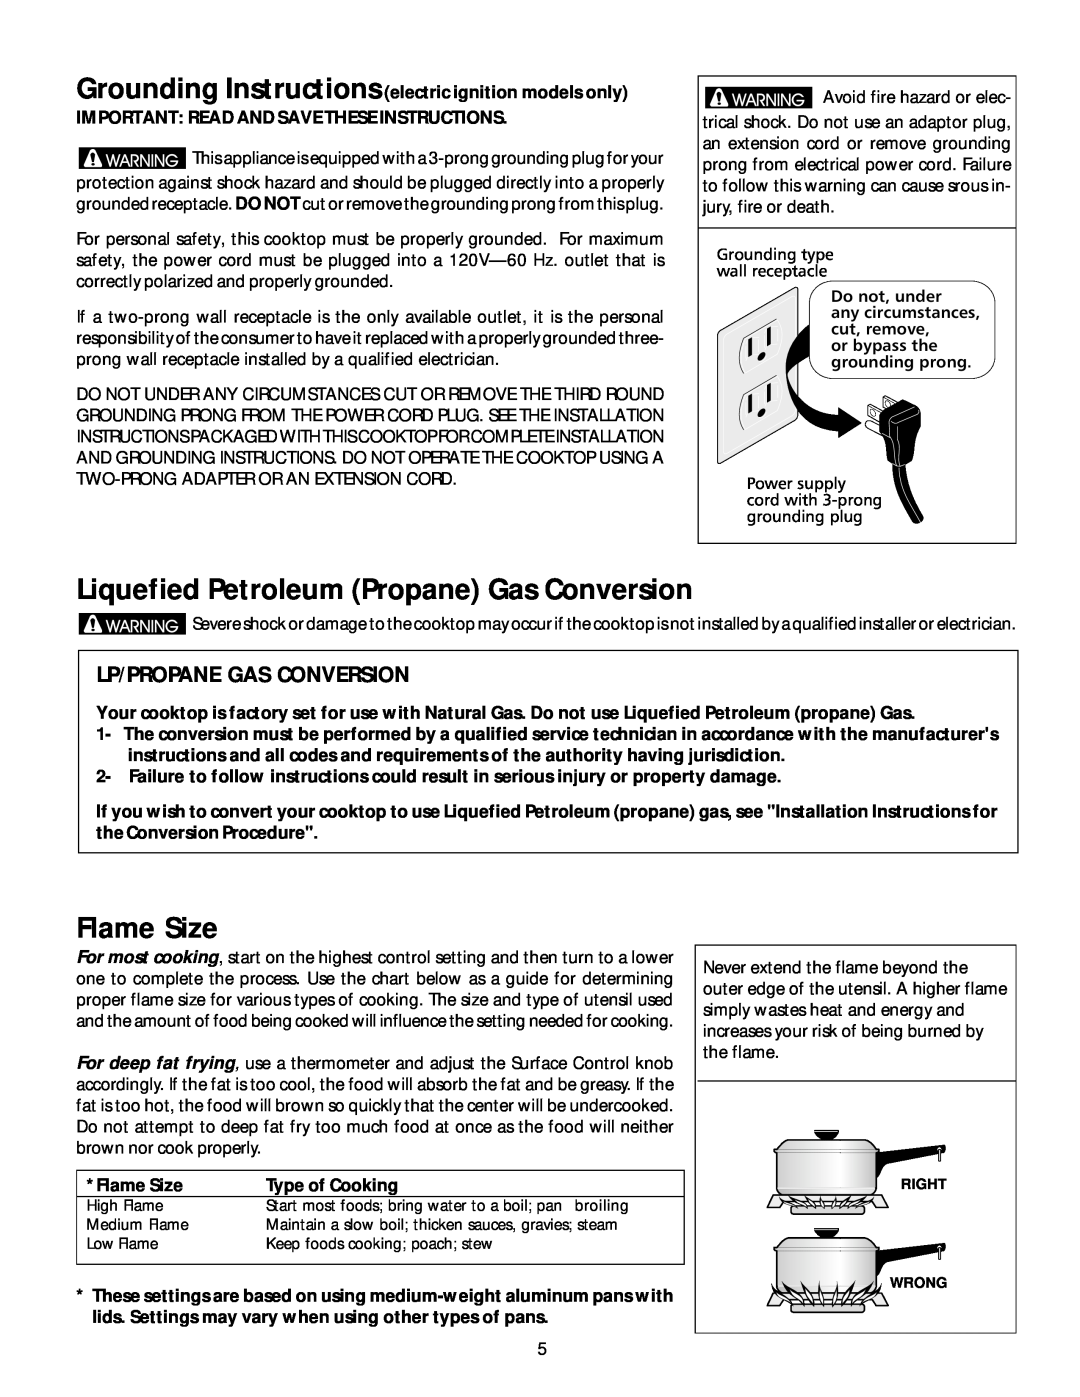 Frigidaire 318068140 manual Liquefied Petroleum Propane Gas Conversion, Flame Size, Lp/Propane Gas Conversion 